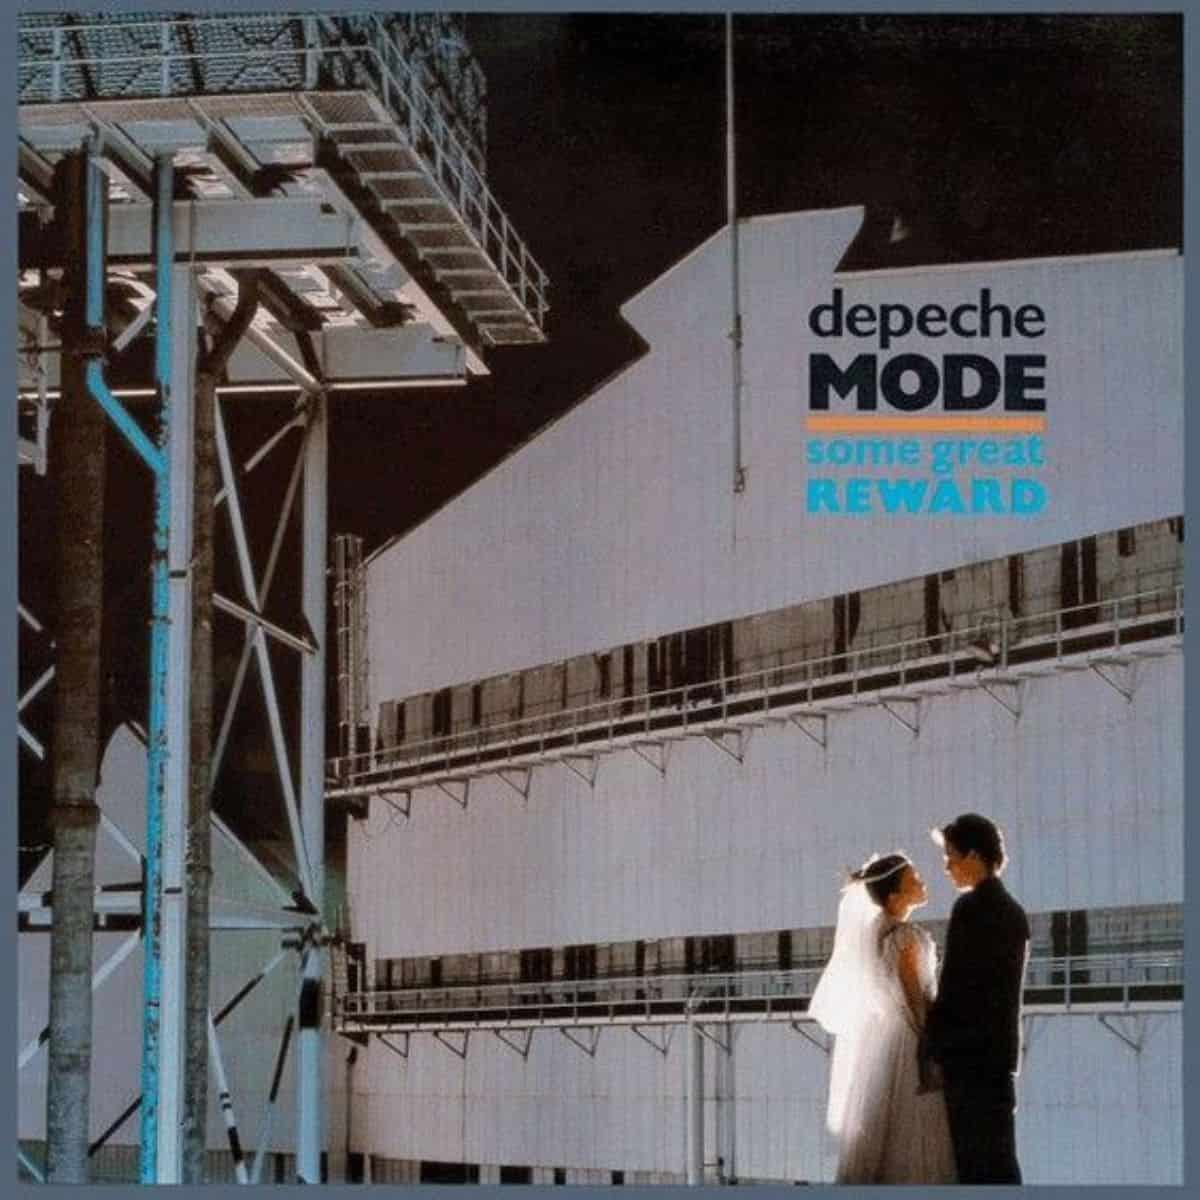 depeche mode album cover